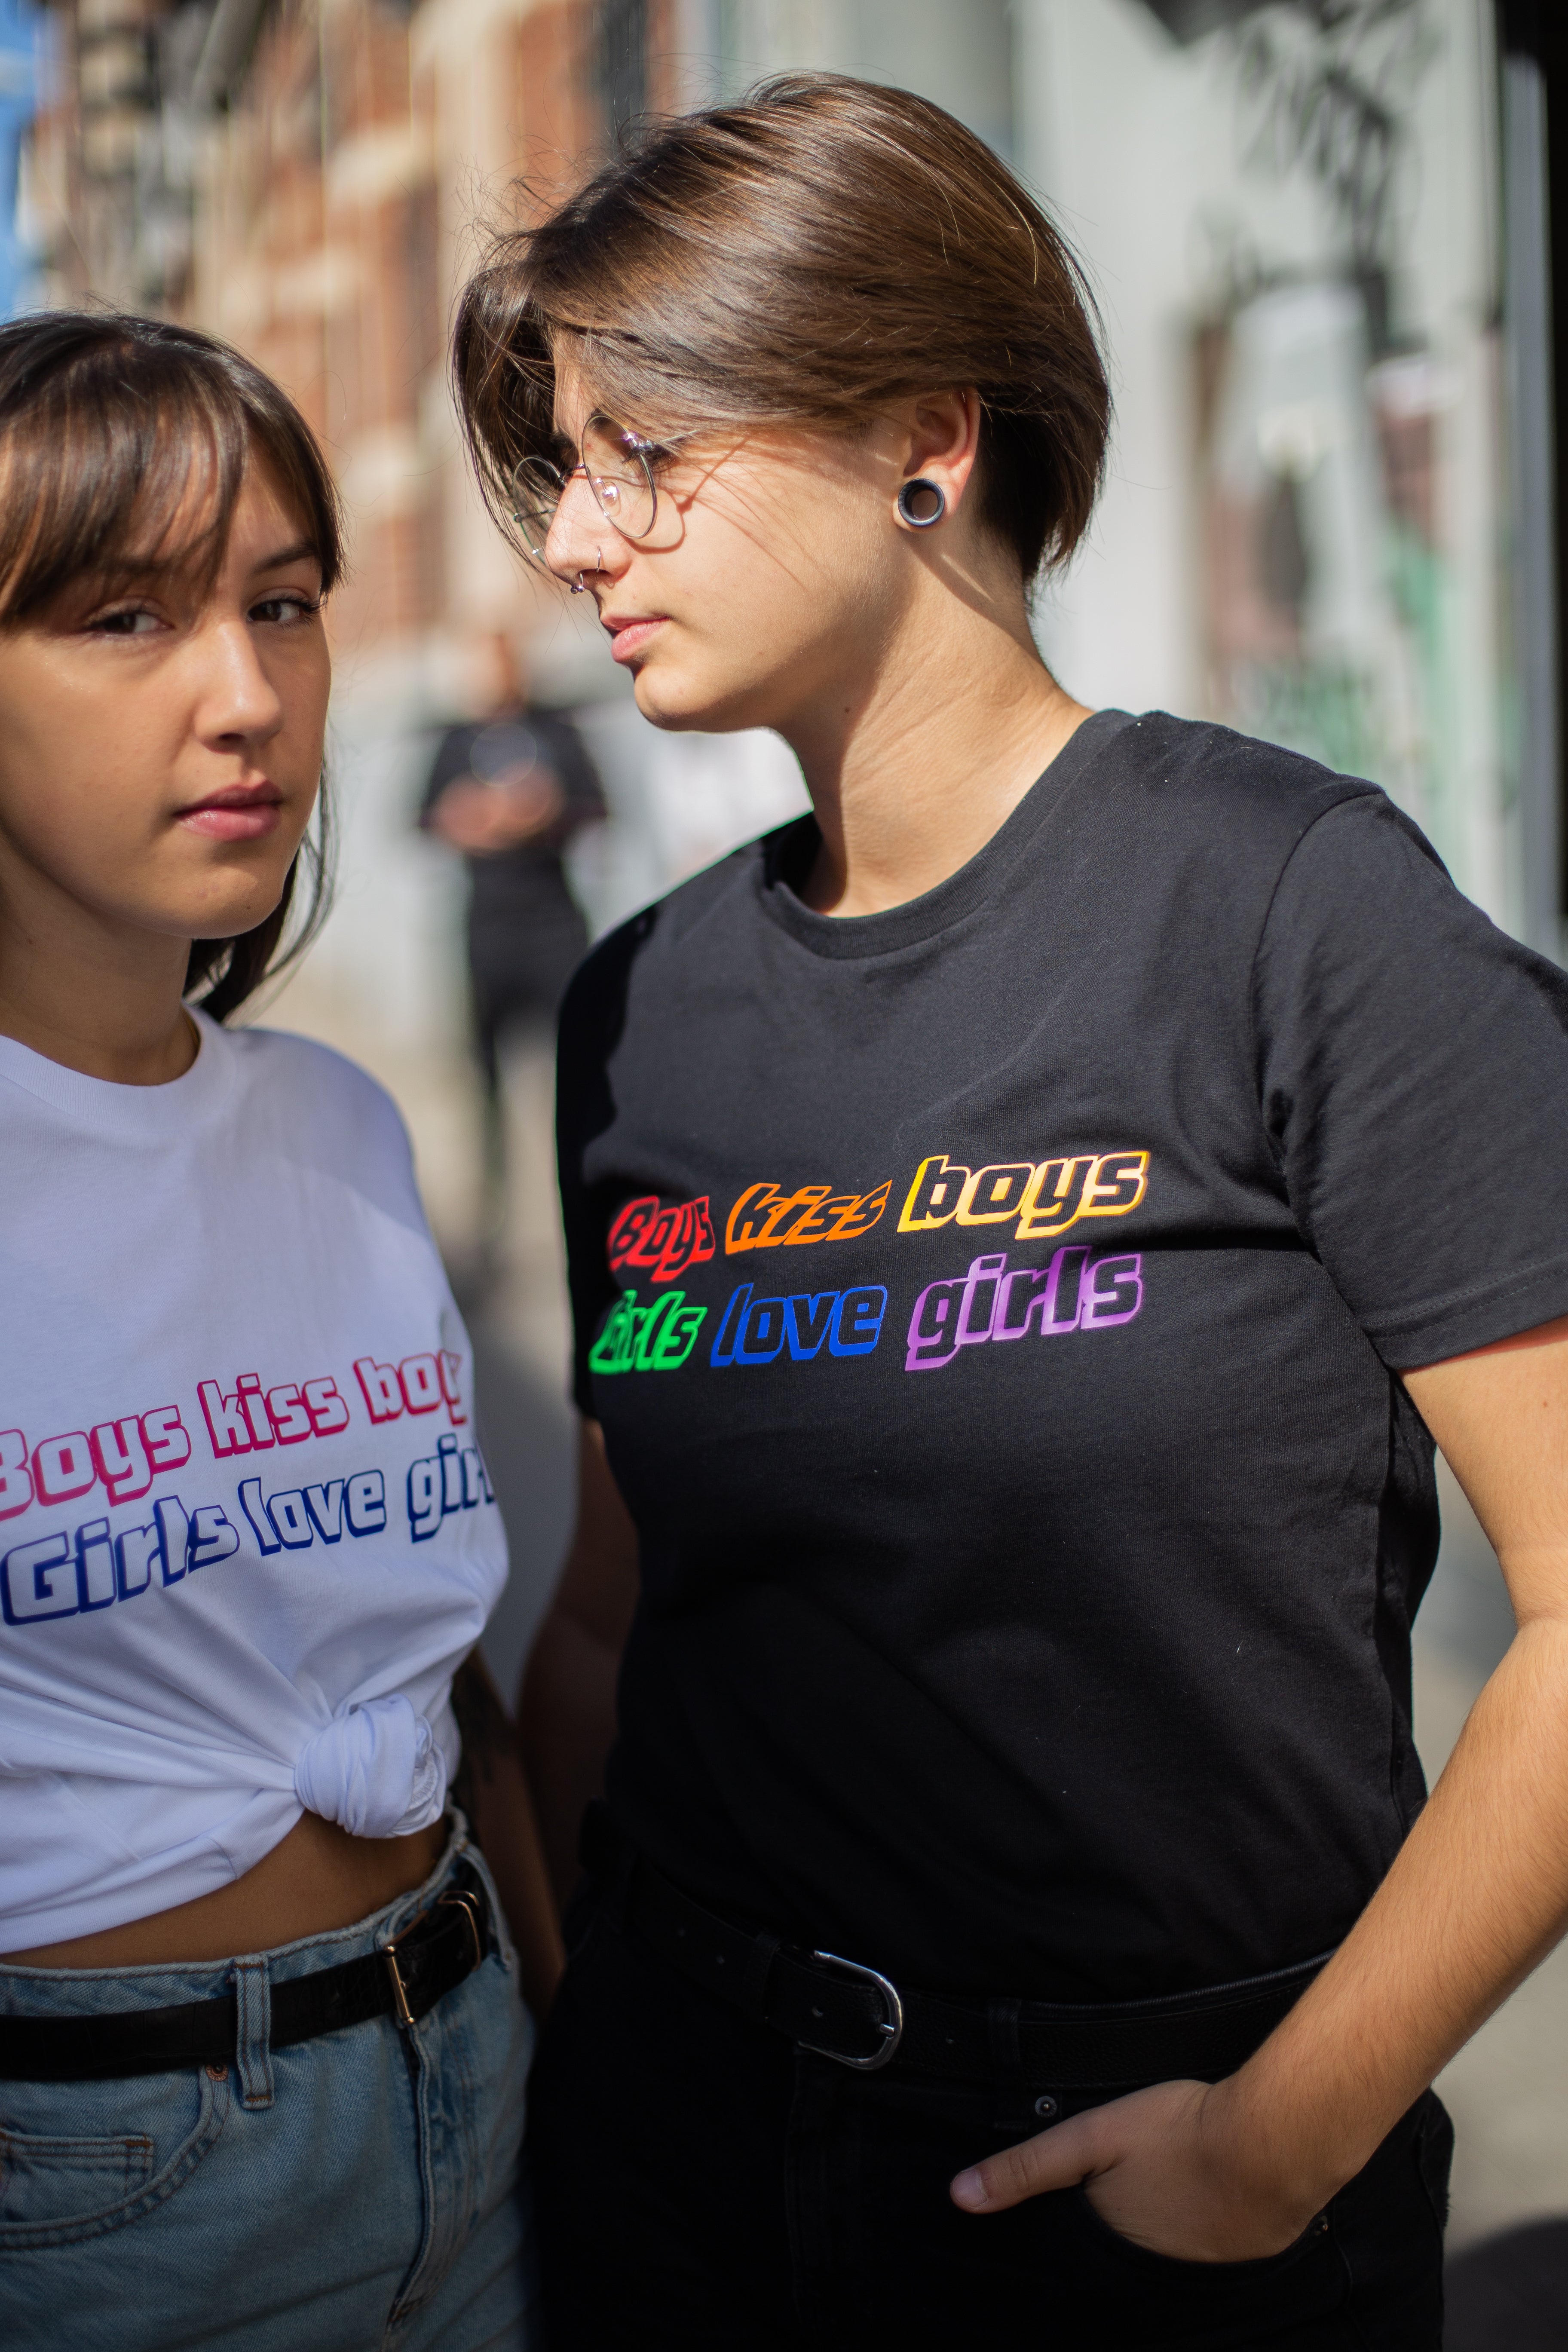 TEE-SHIRT "GIRLS LOVE GIRLS, BOYS KISS BOYS"